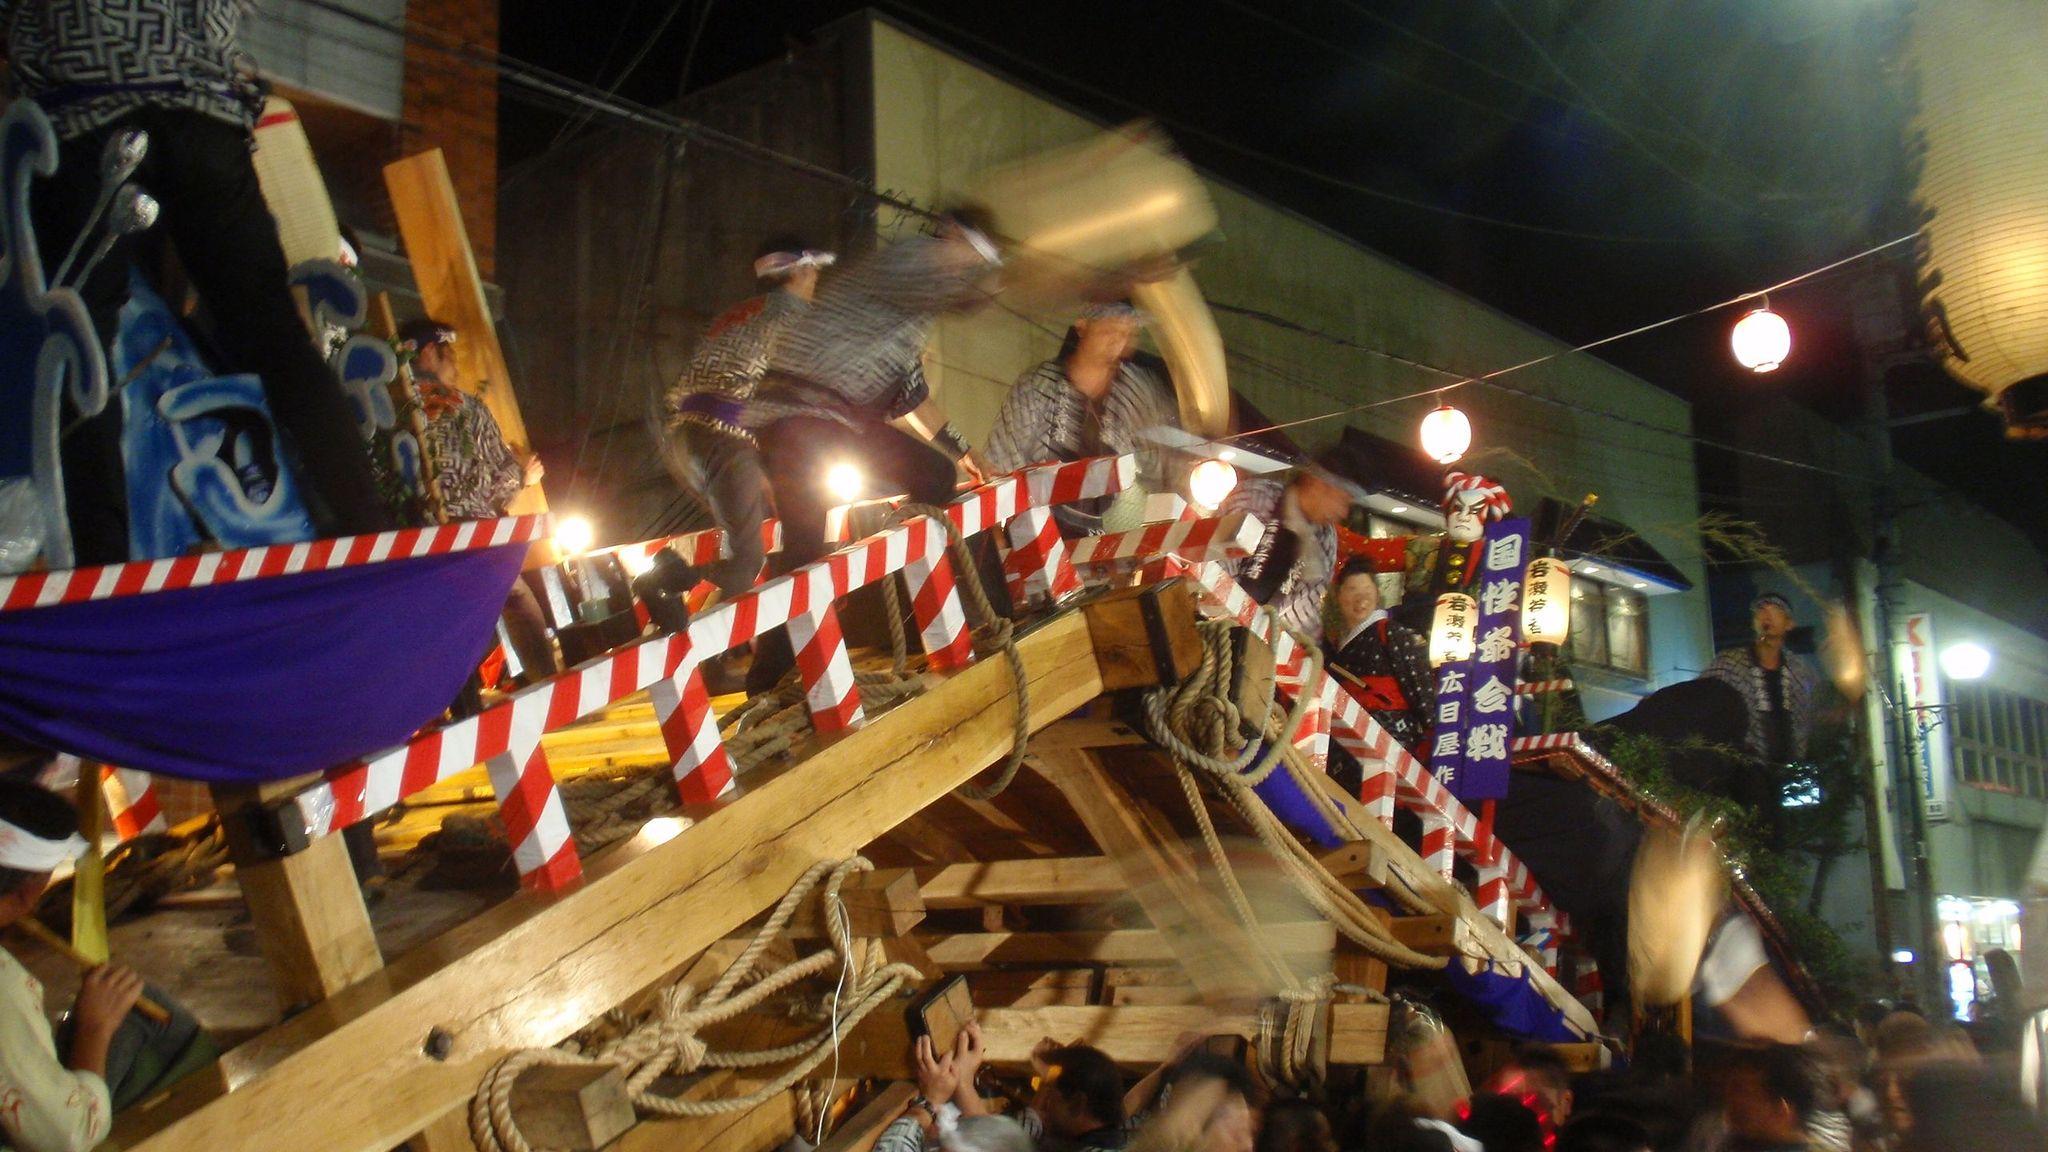 Floats colliding at the Kakunodate Festival